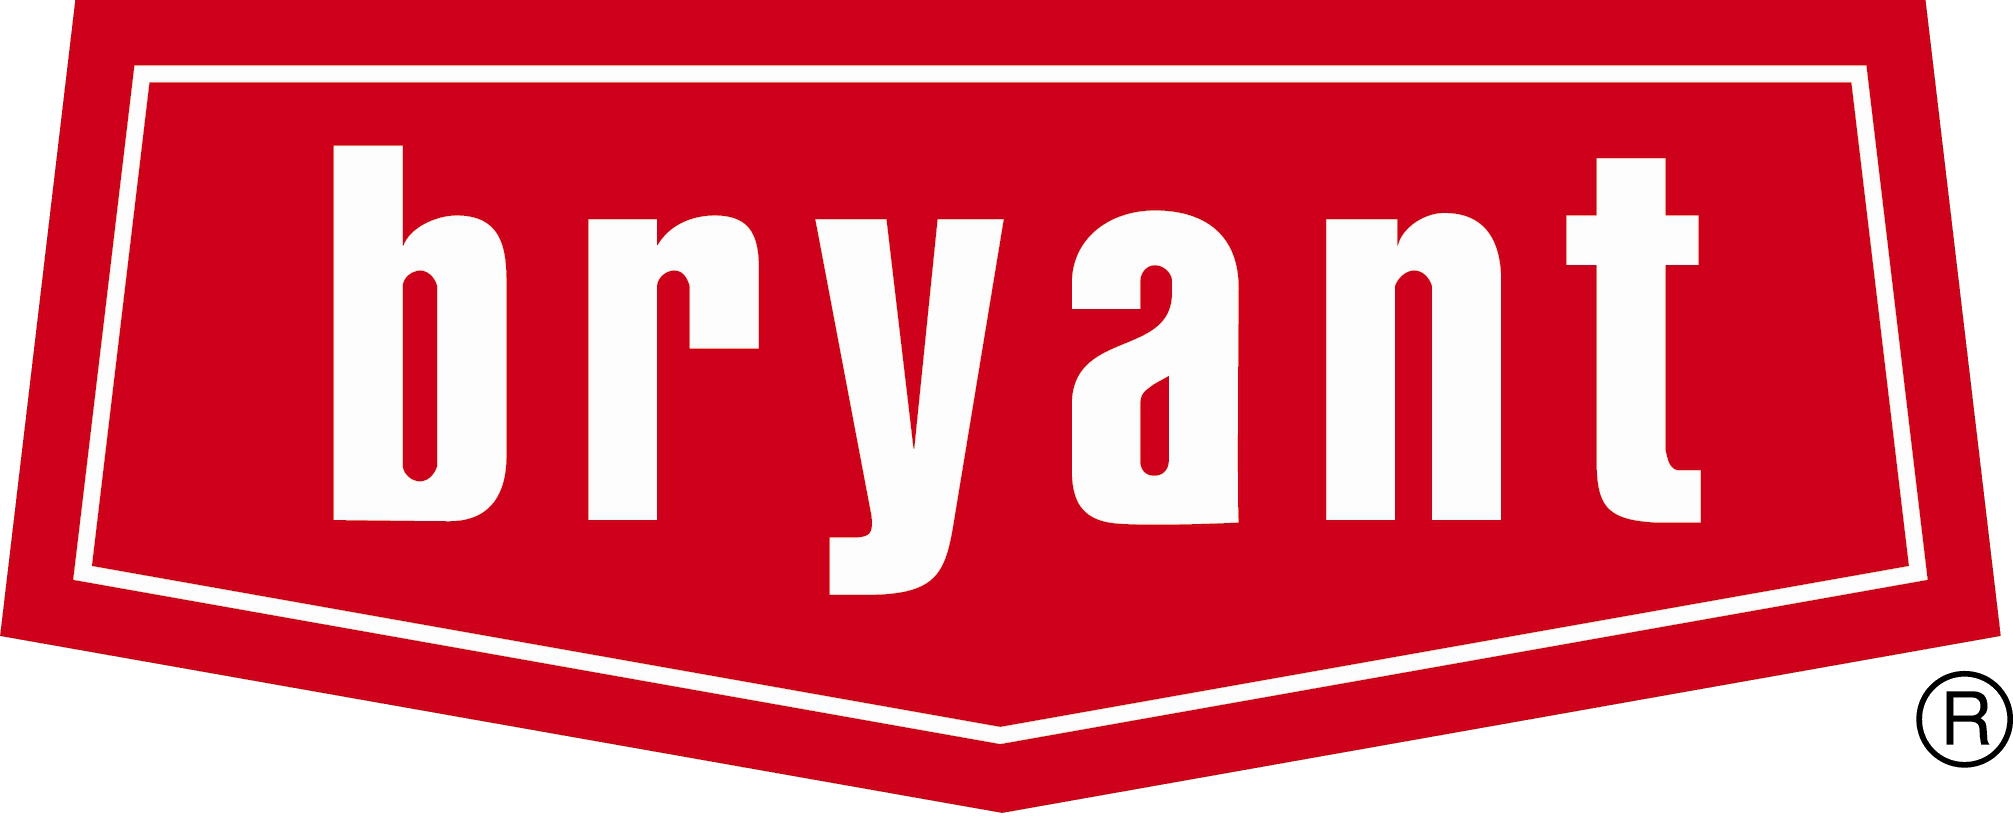 bryant logo.png